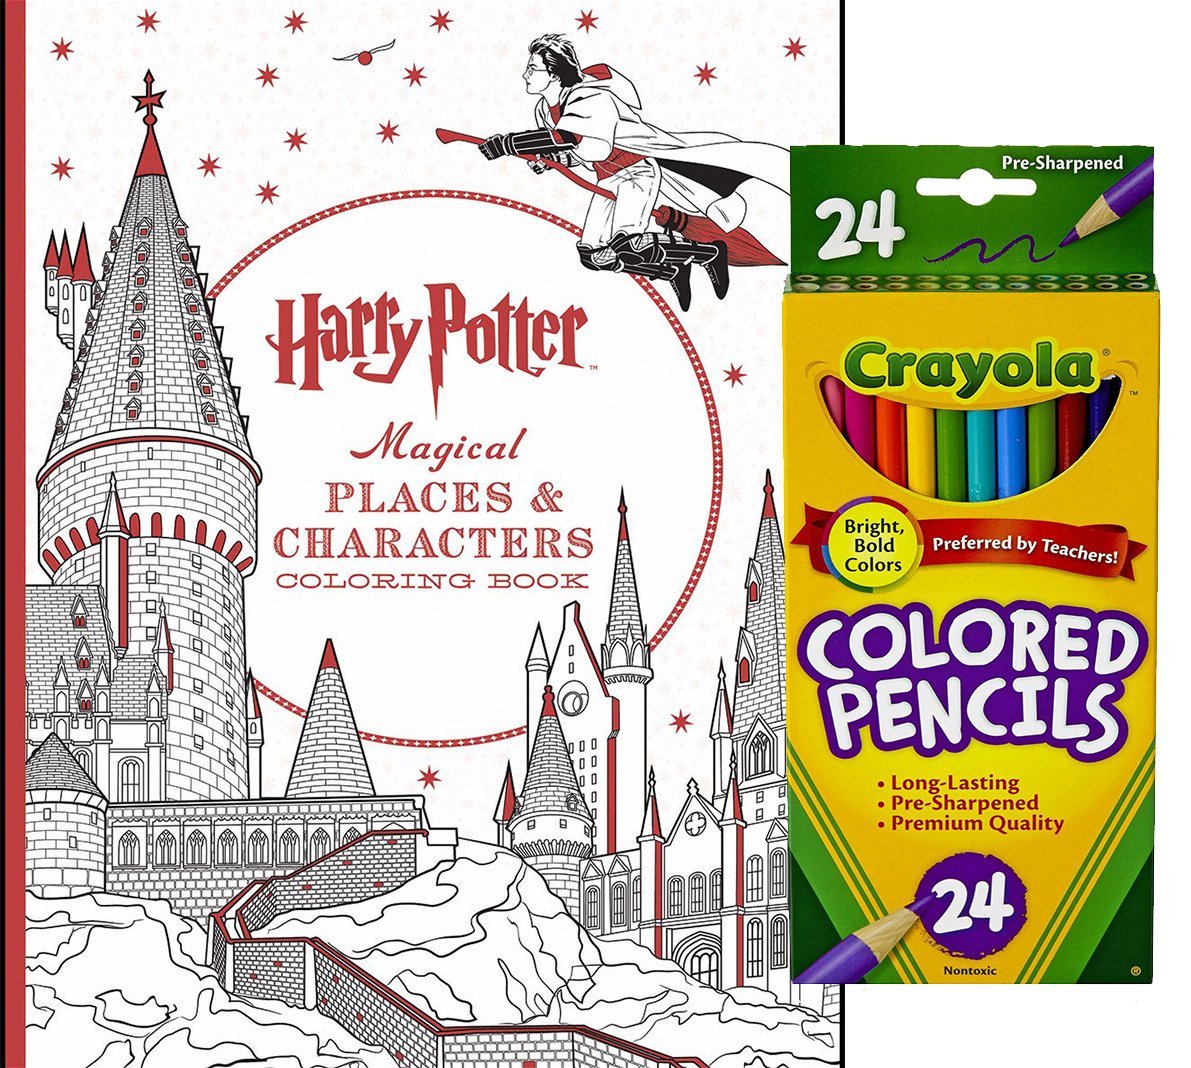 15 Magical Harry Potter Toys | www.onecrazyhouse.com